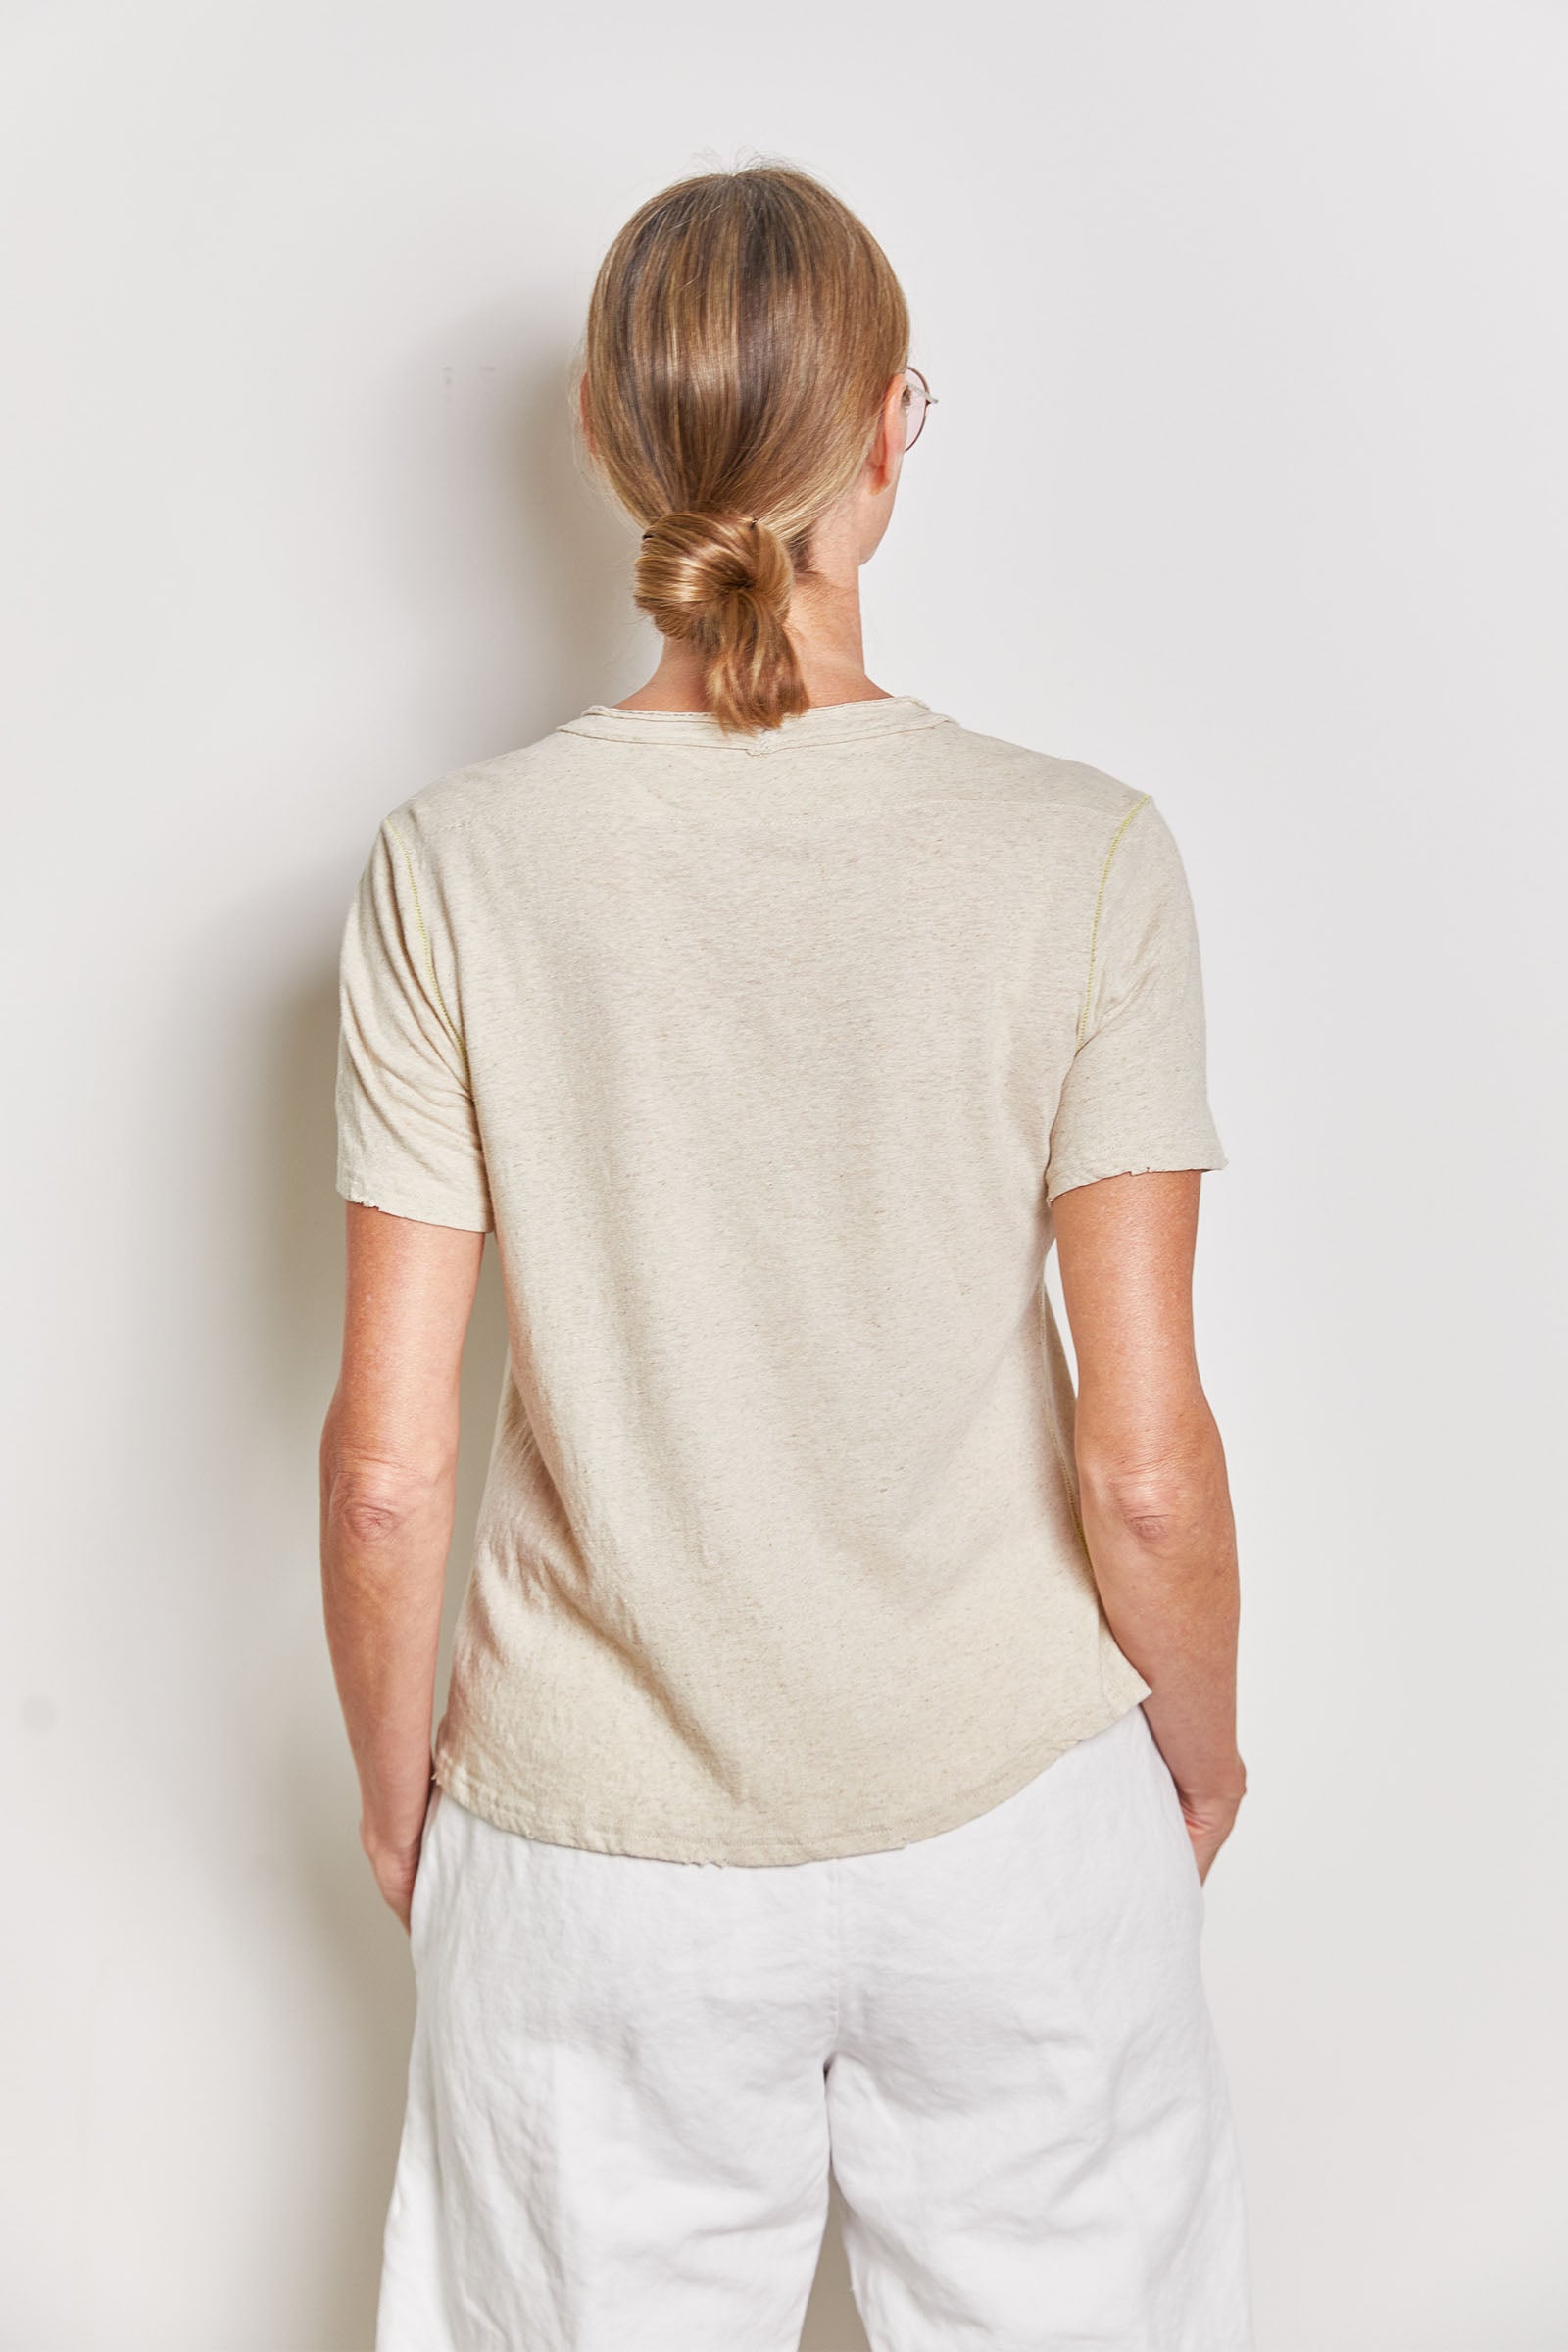 byfreer's ryder cotton/linen classic t-shirt.